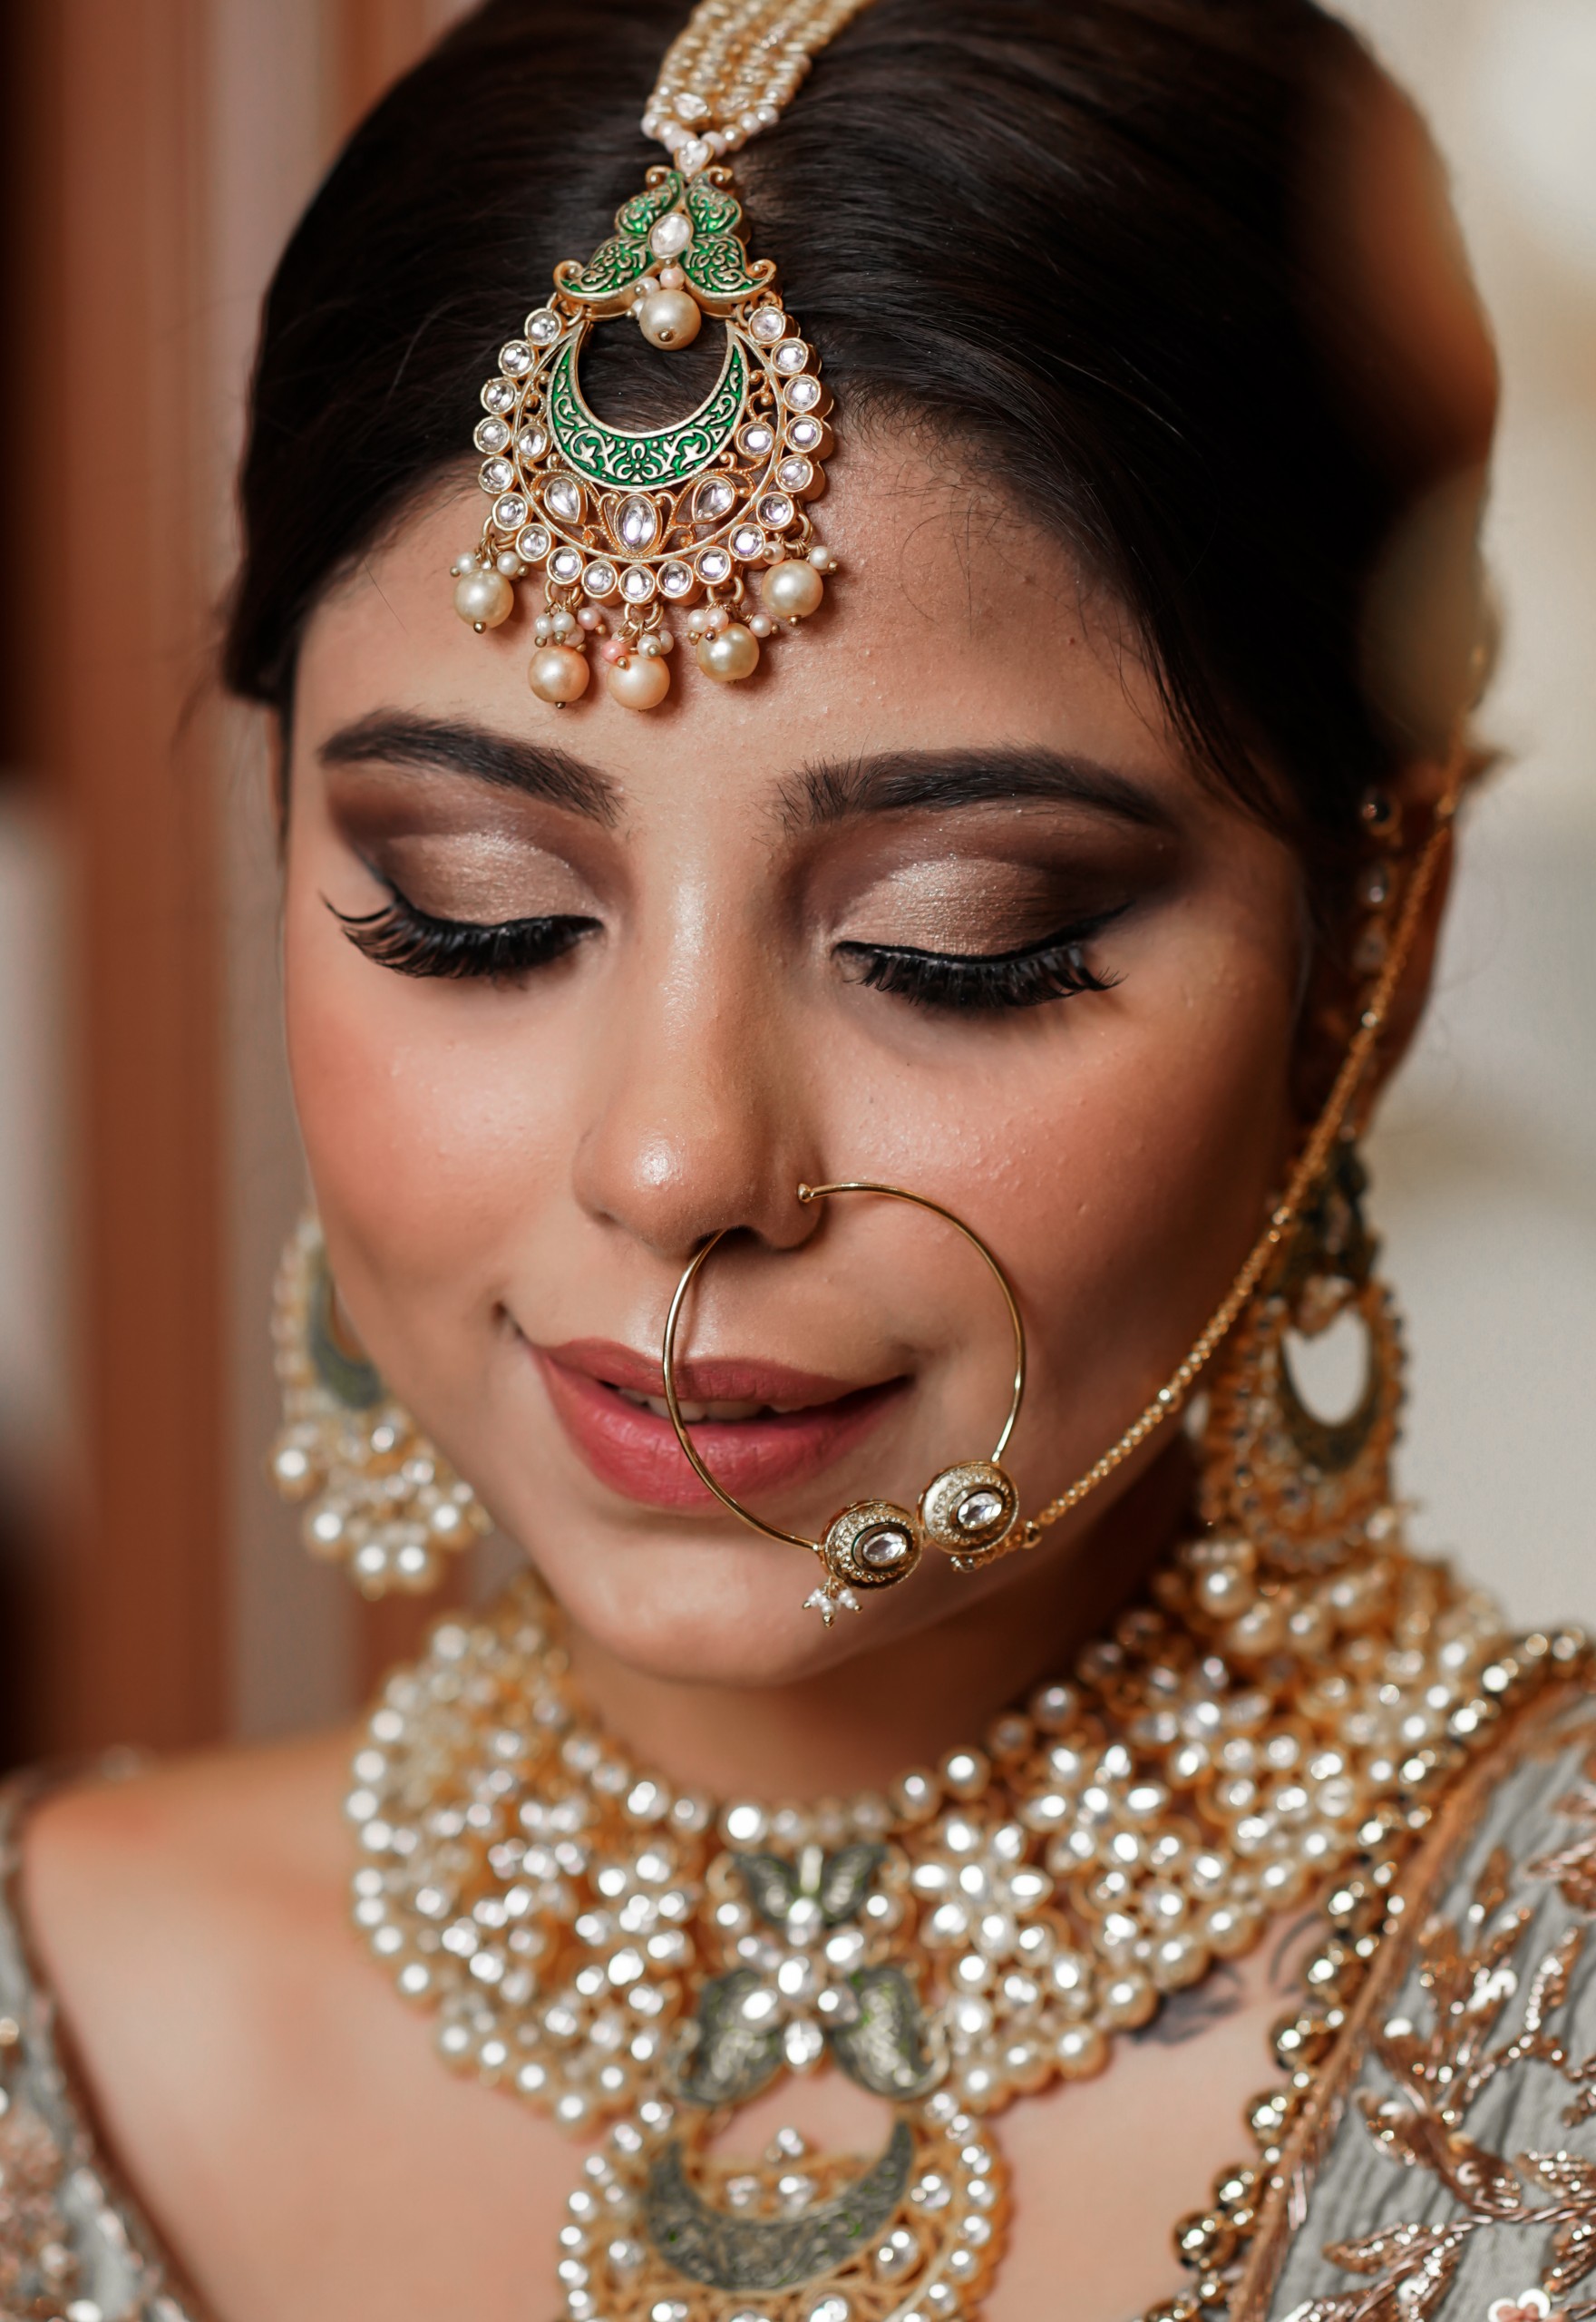 Portrait of a beautiful female Indian model